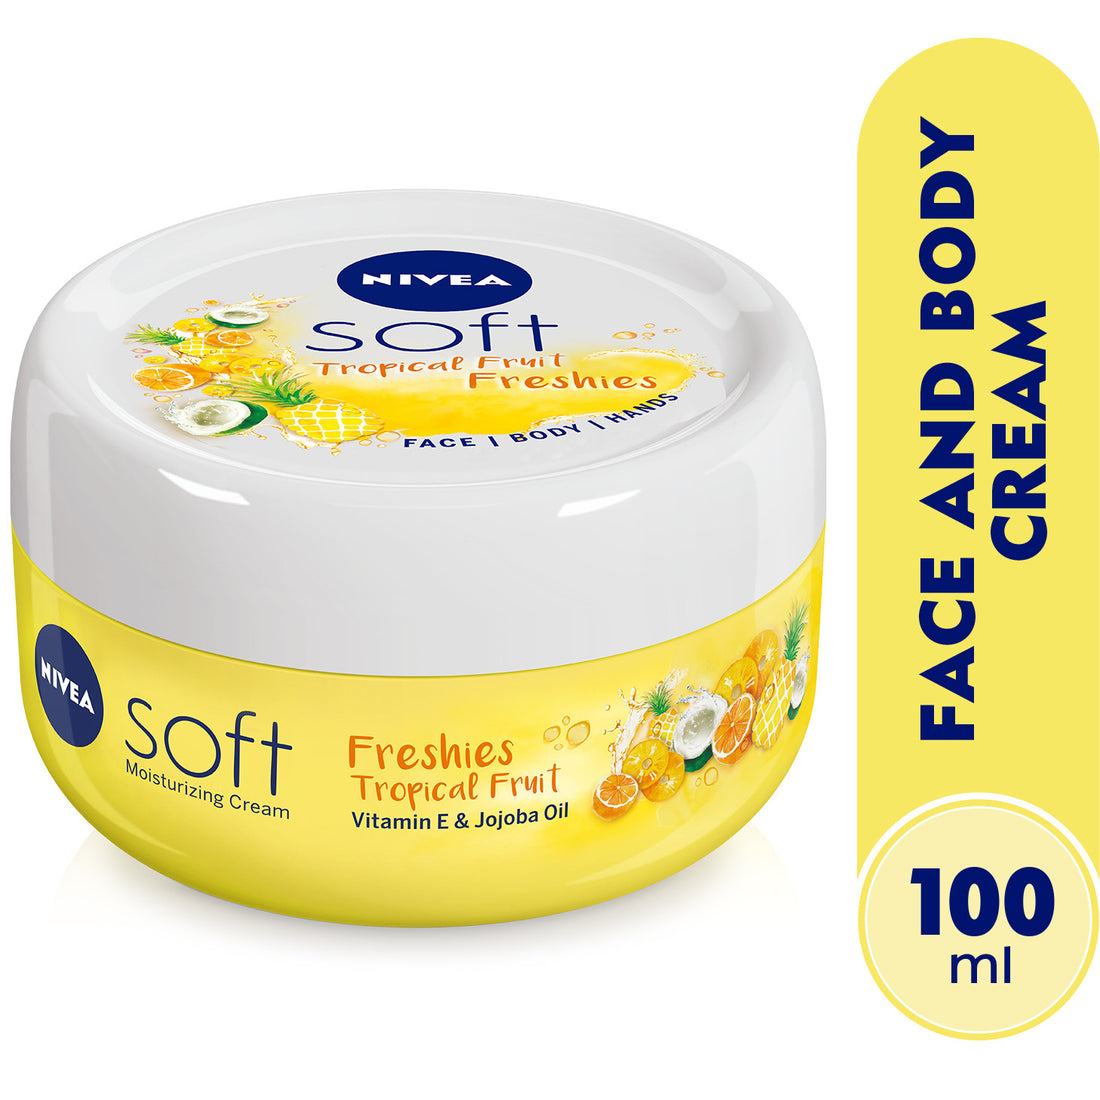 Nivea Soft Freshies Moisturizing Cream, Tropical Fruit, Jar 100ml